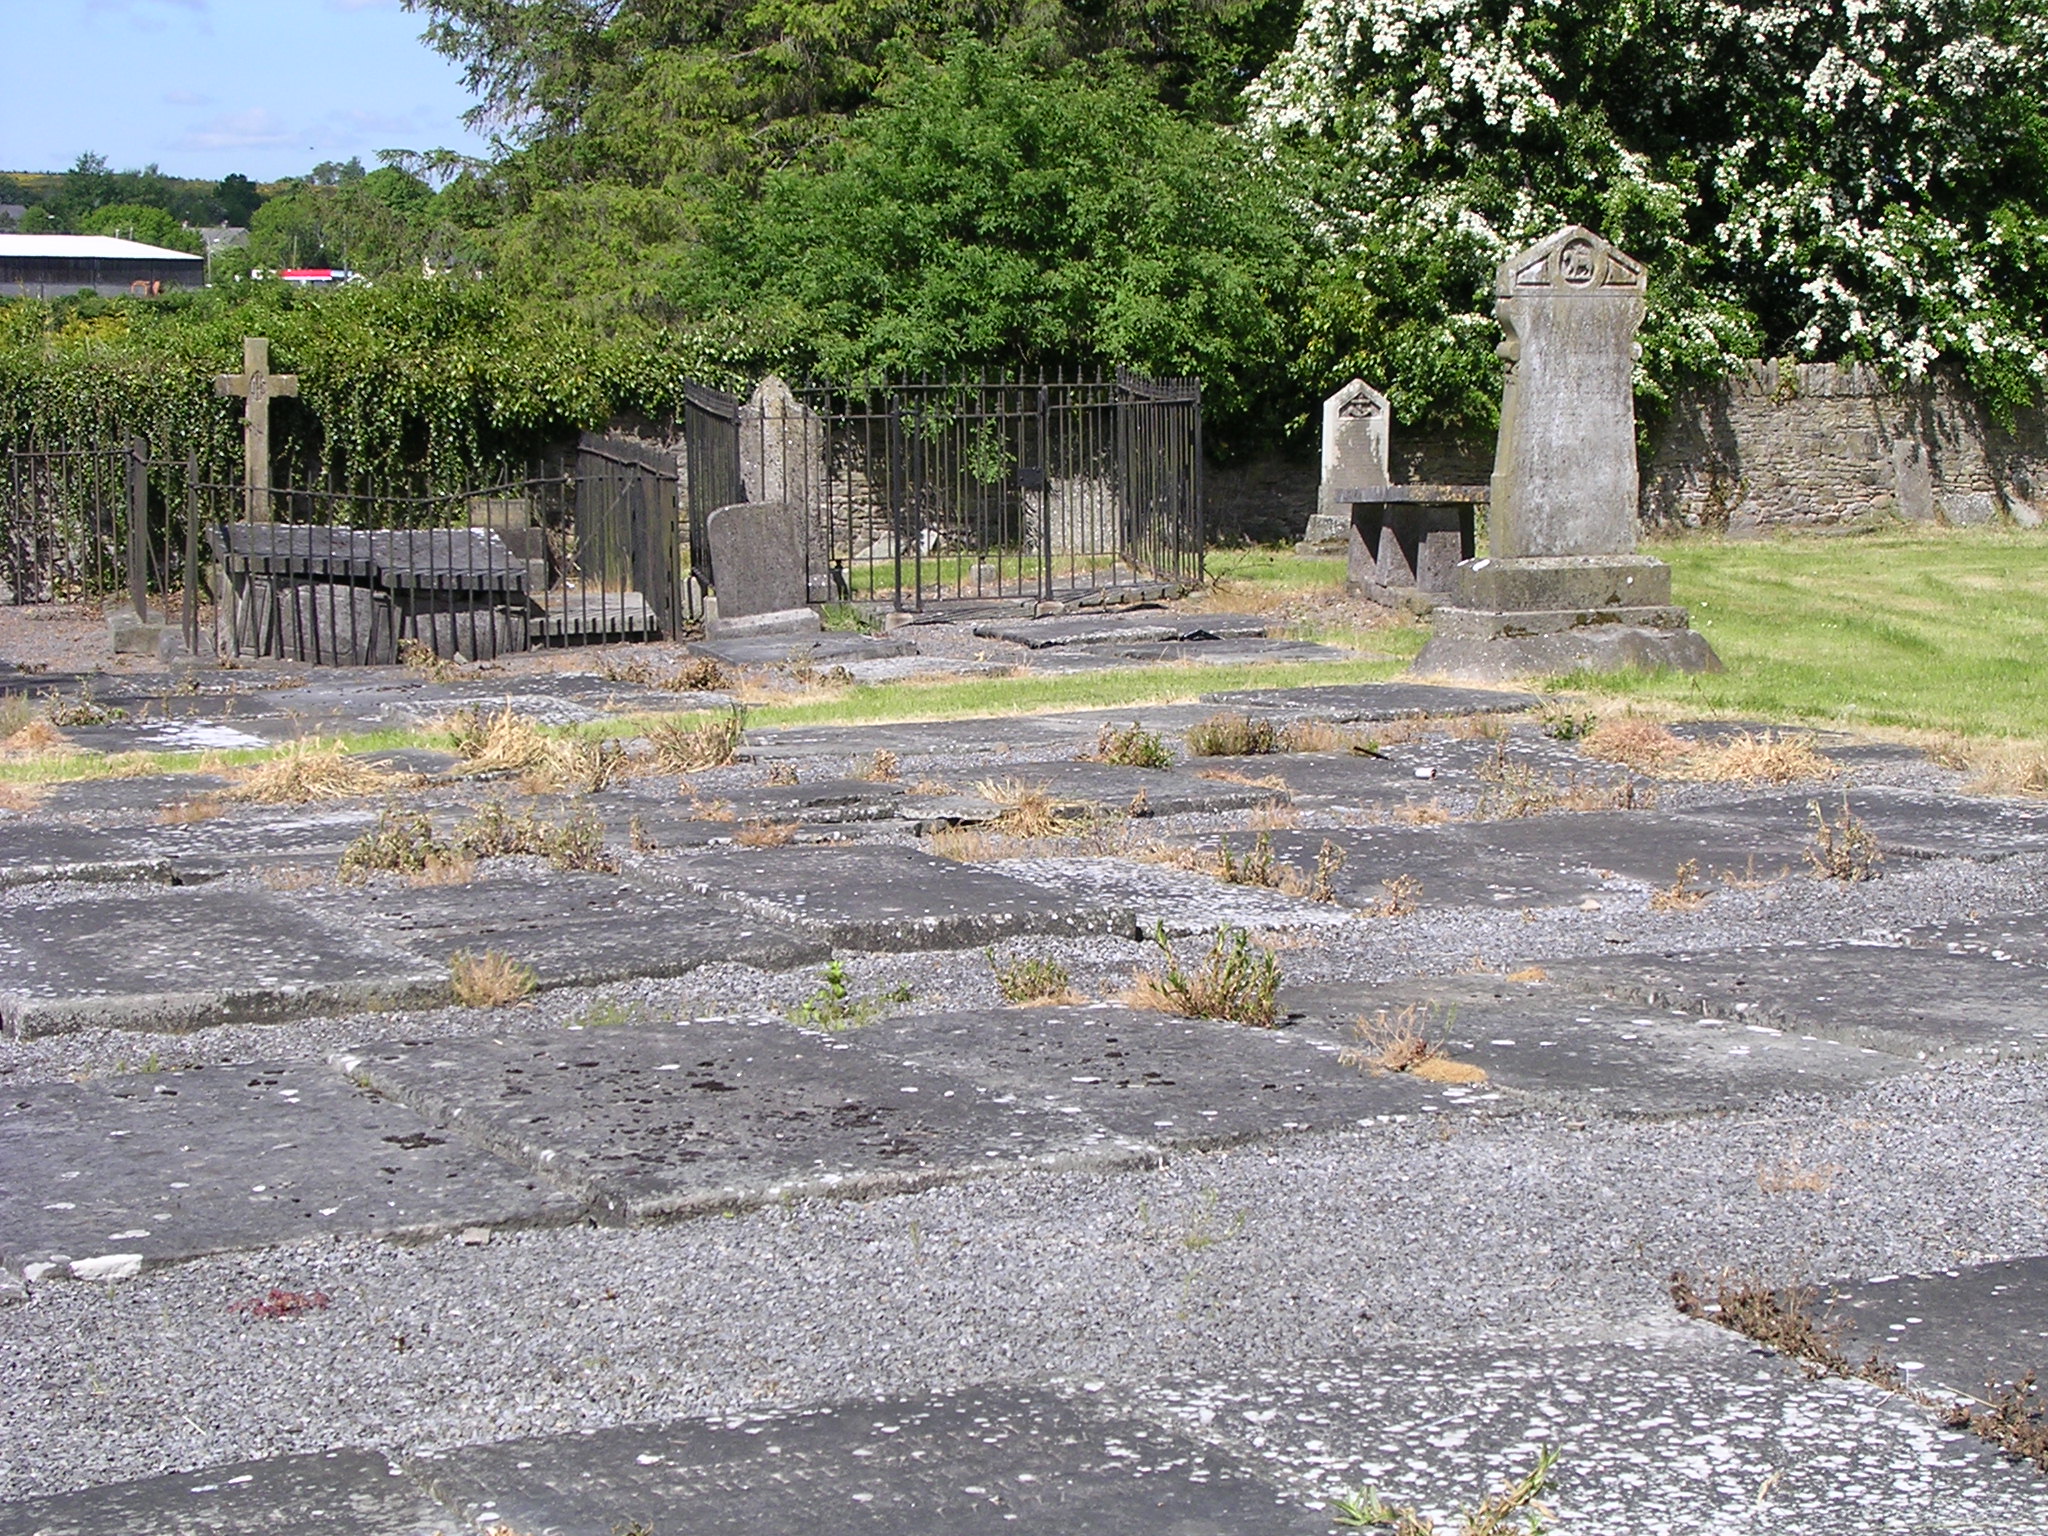 Gravestones Rosenallis Cemetery, Rosenallis, Co Laois, Ireland (focus on back headstones)